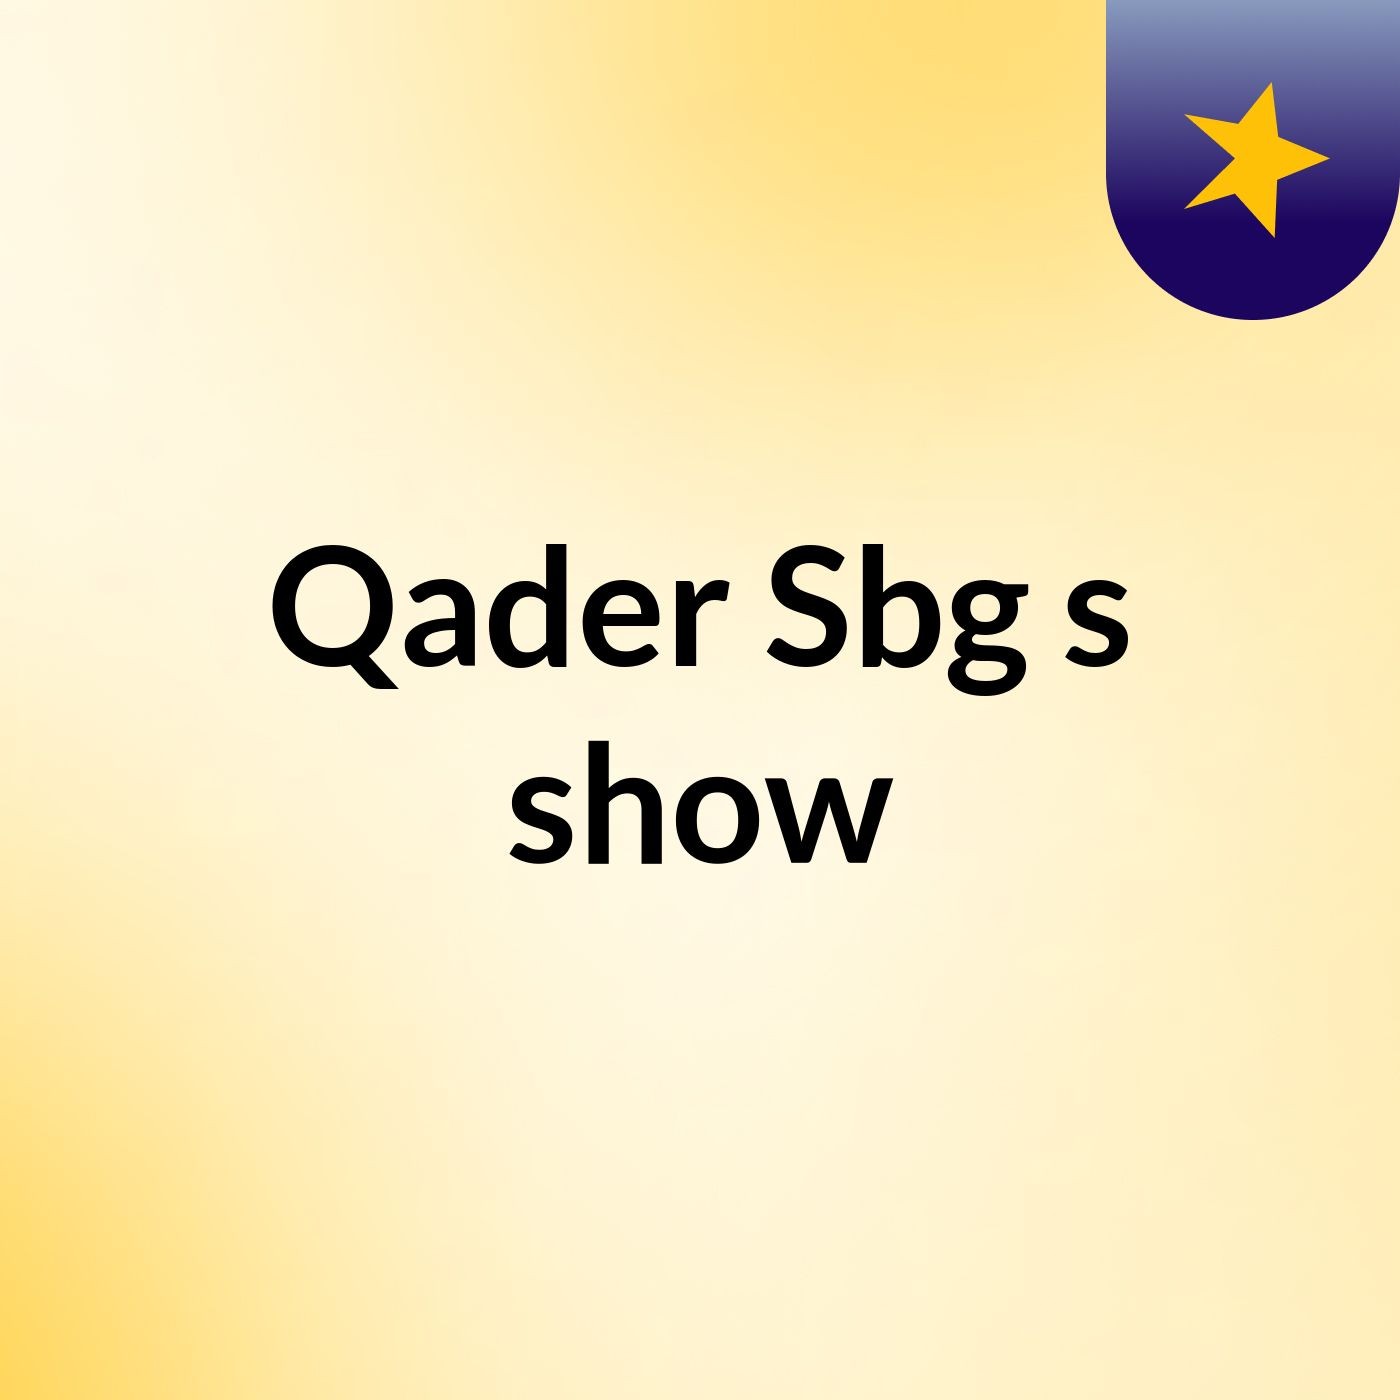 Qader Sbg's show